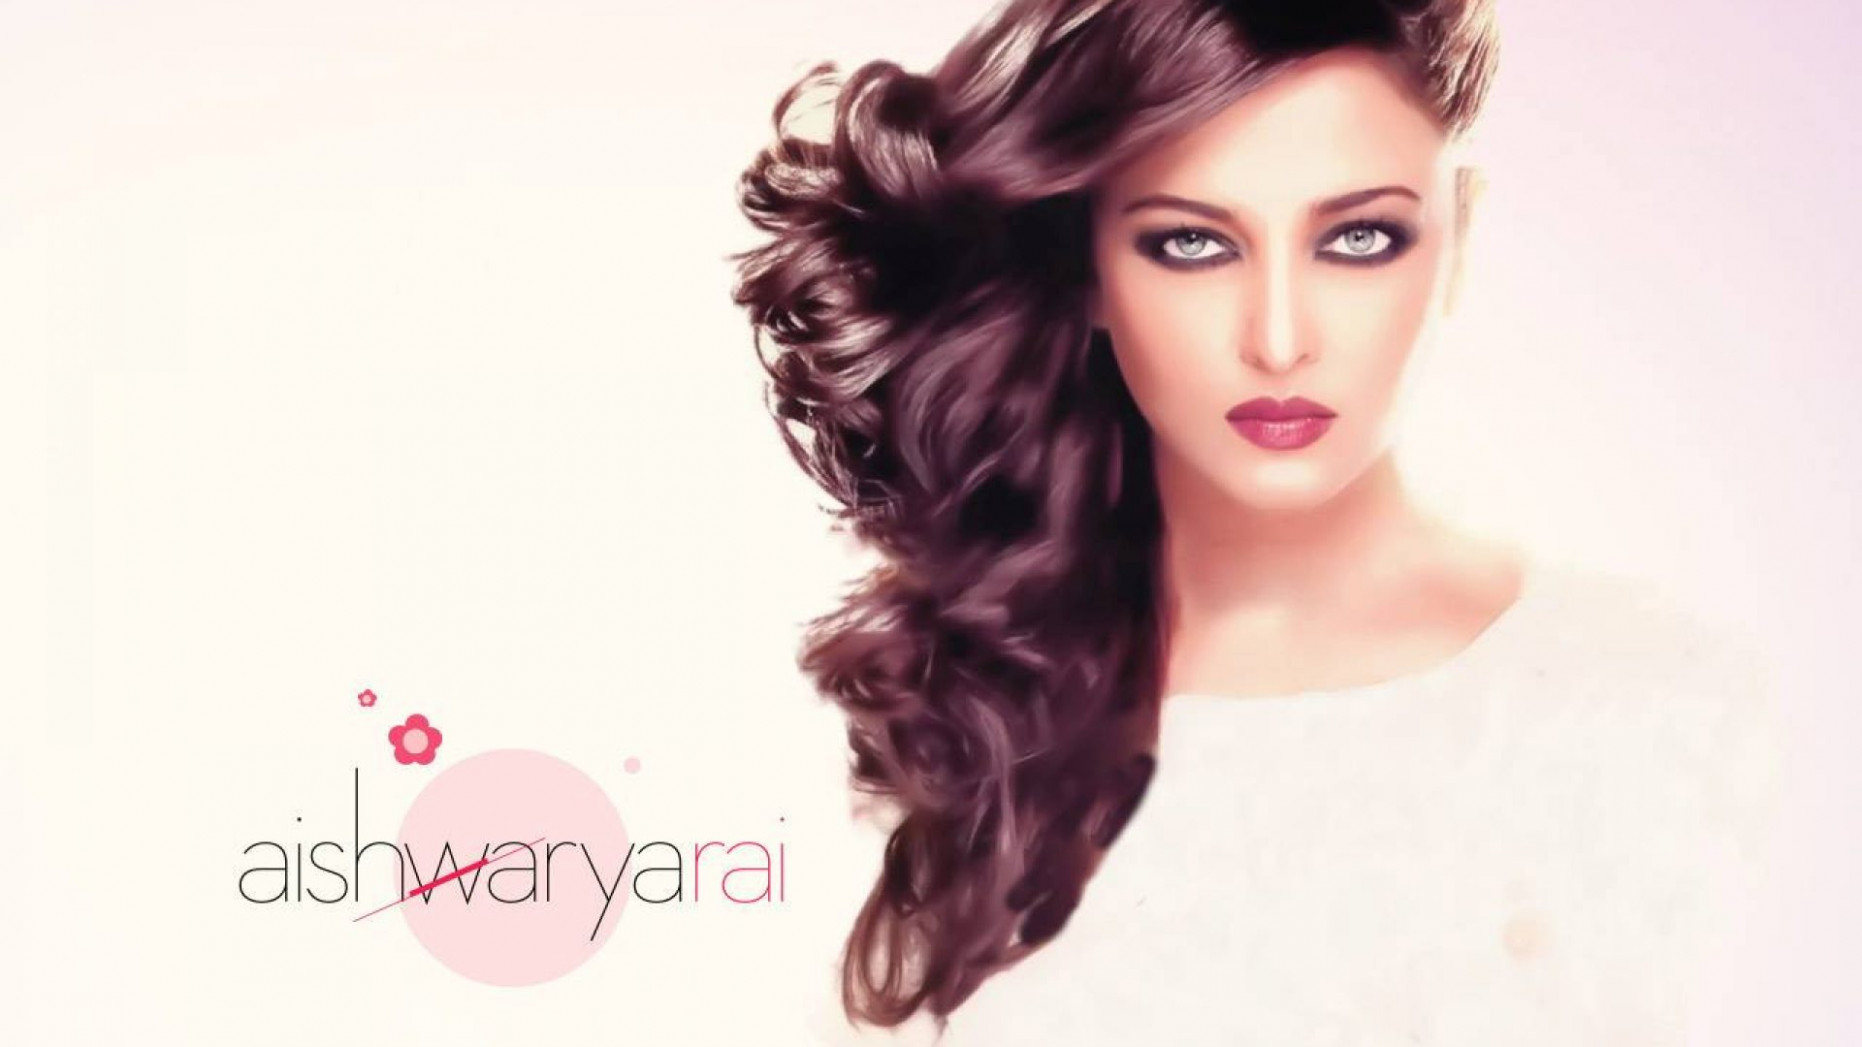 Aishwarya Rai , HD Wallpaper & Backgrounds